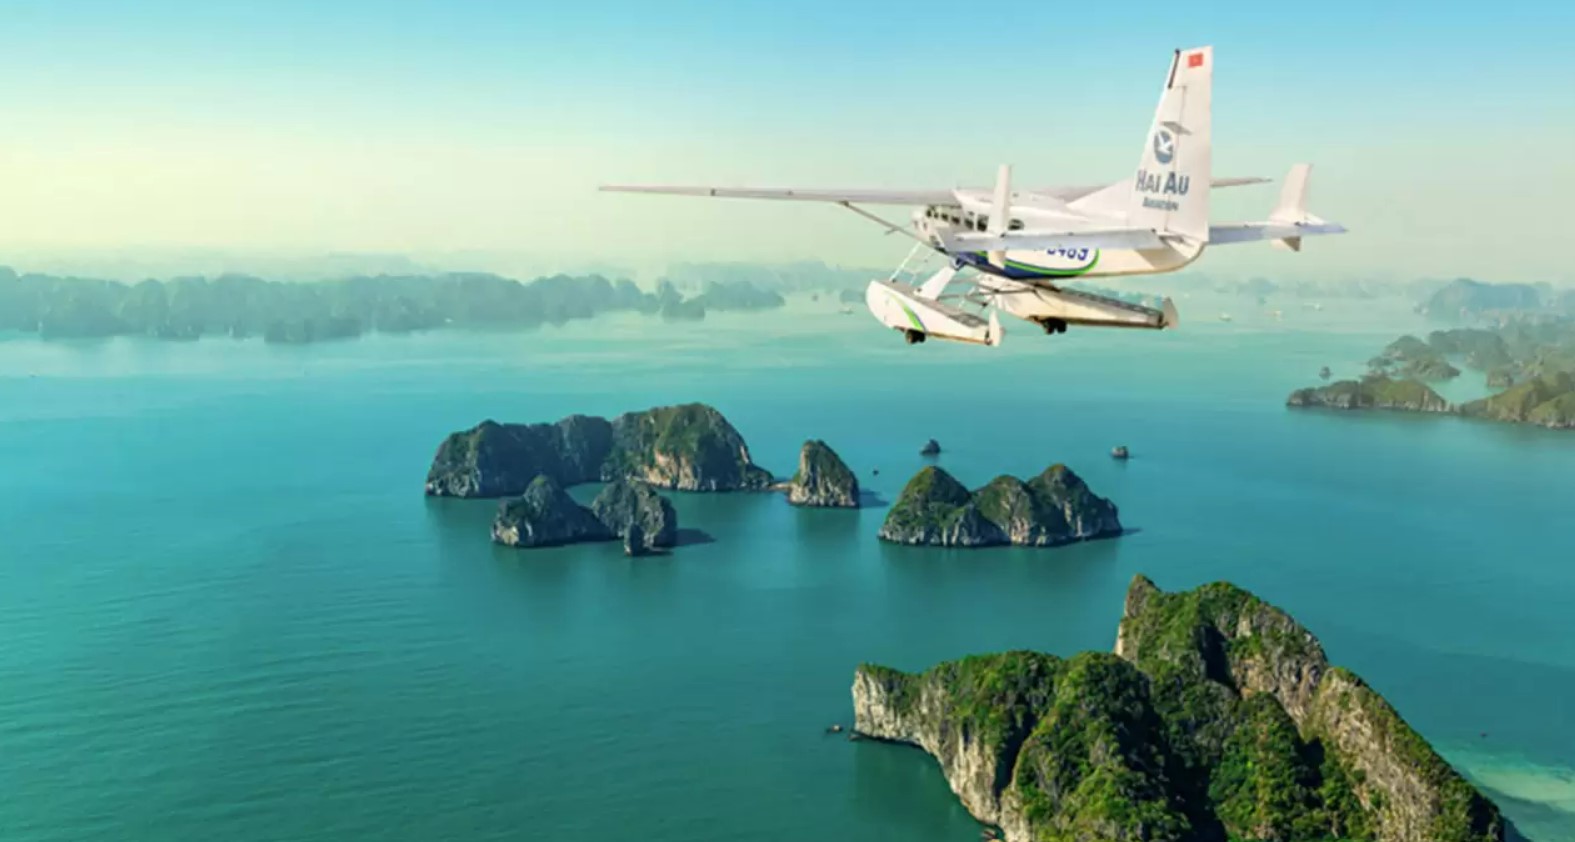 Take a seaplane tour over the bay.